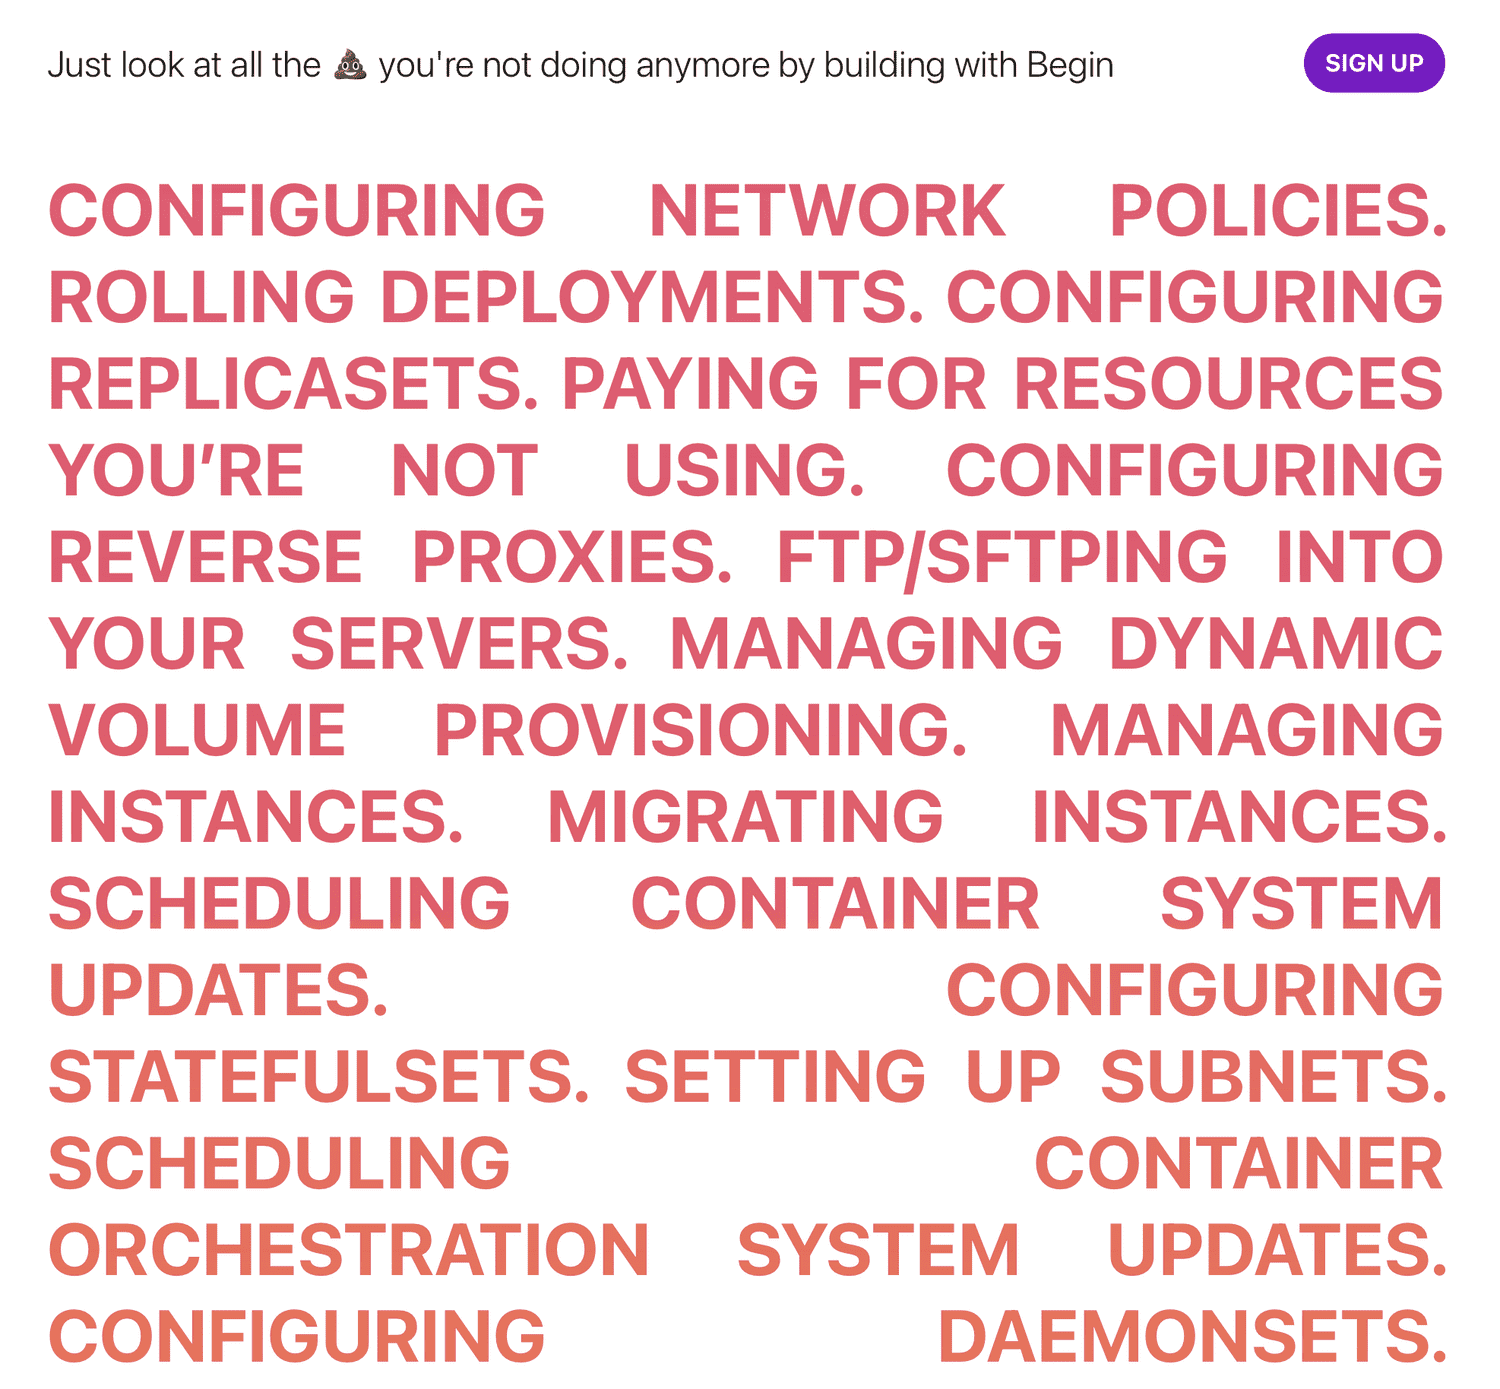 Begin.com's wall of undifferentiated tasks